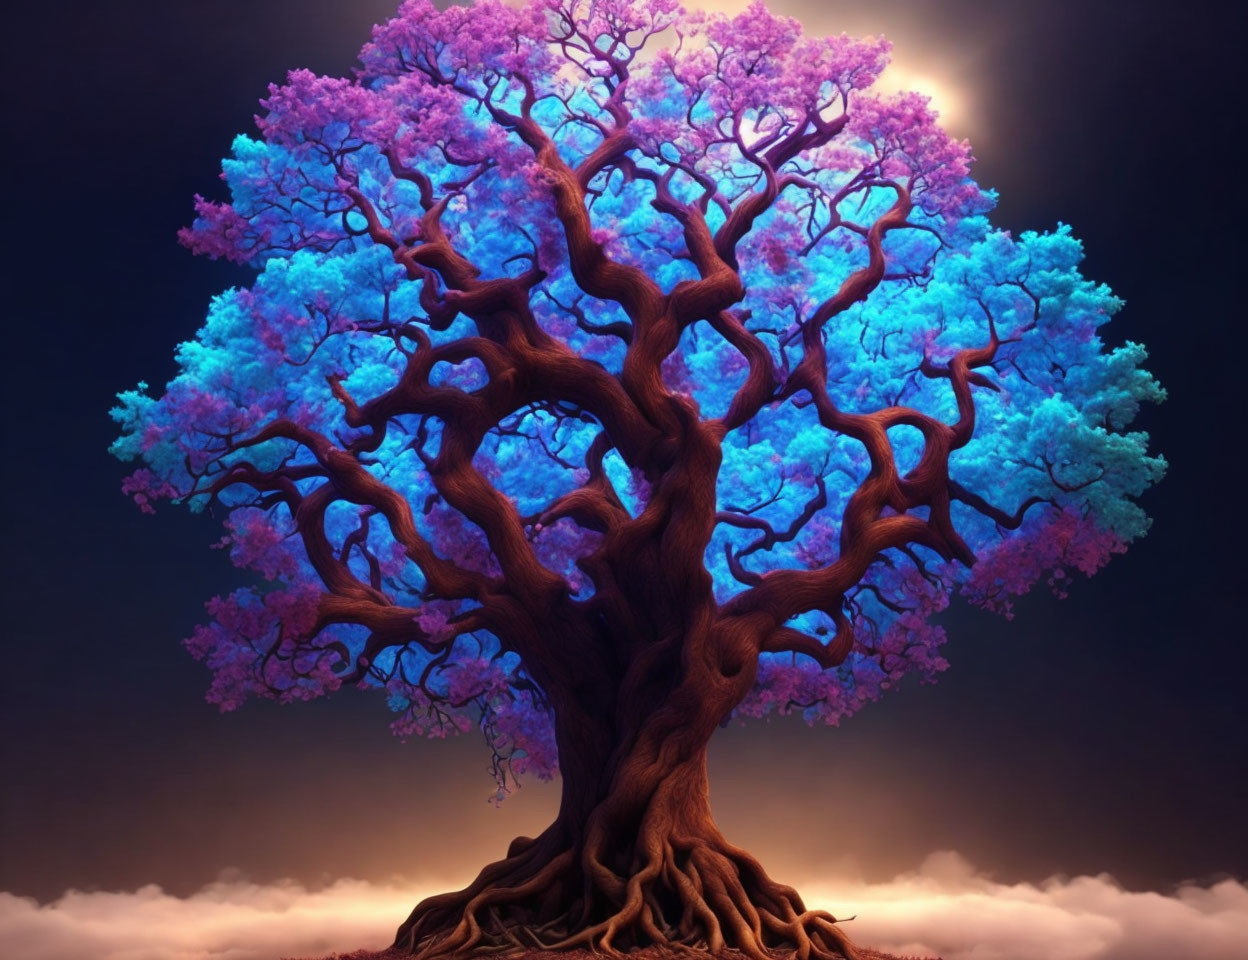 Majestic tree with vibrant blue-purple foliage under full moon